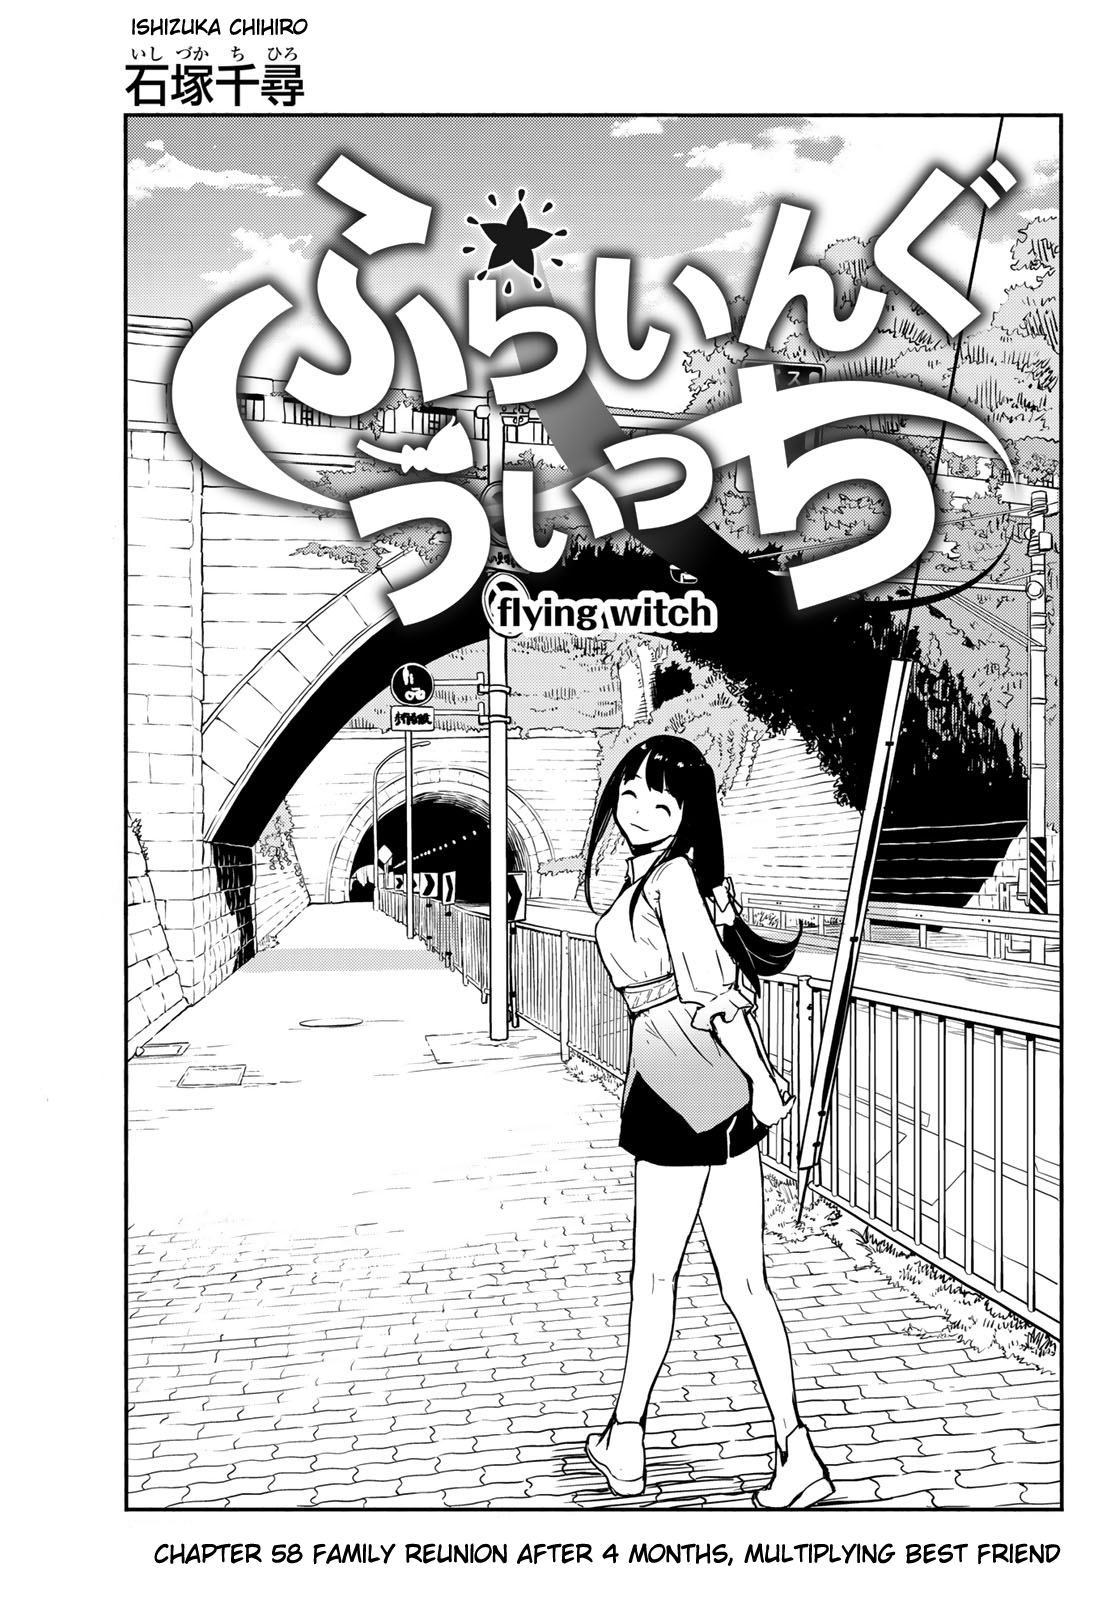 Flying Witch (ISHIZUKA Chihiro) - chapter 58 - #3